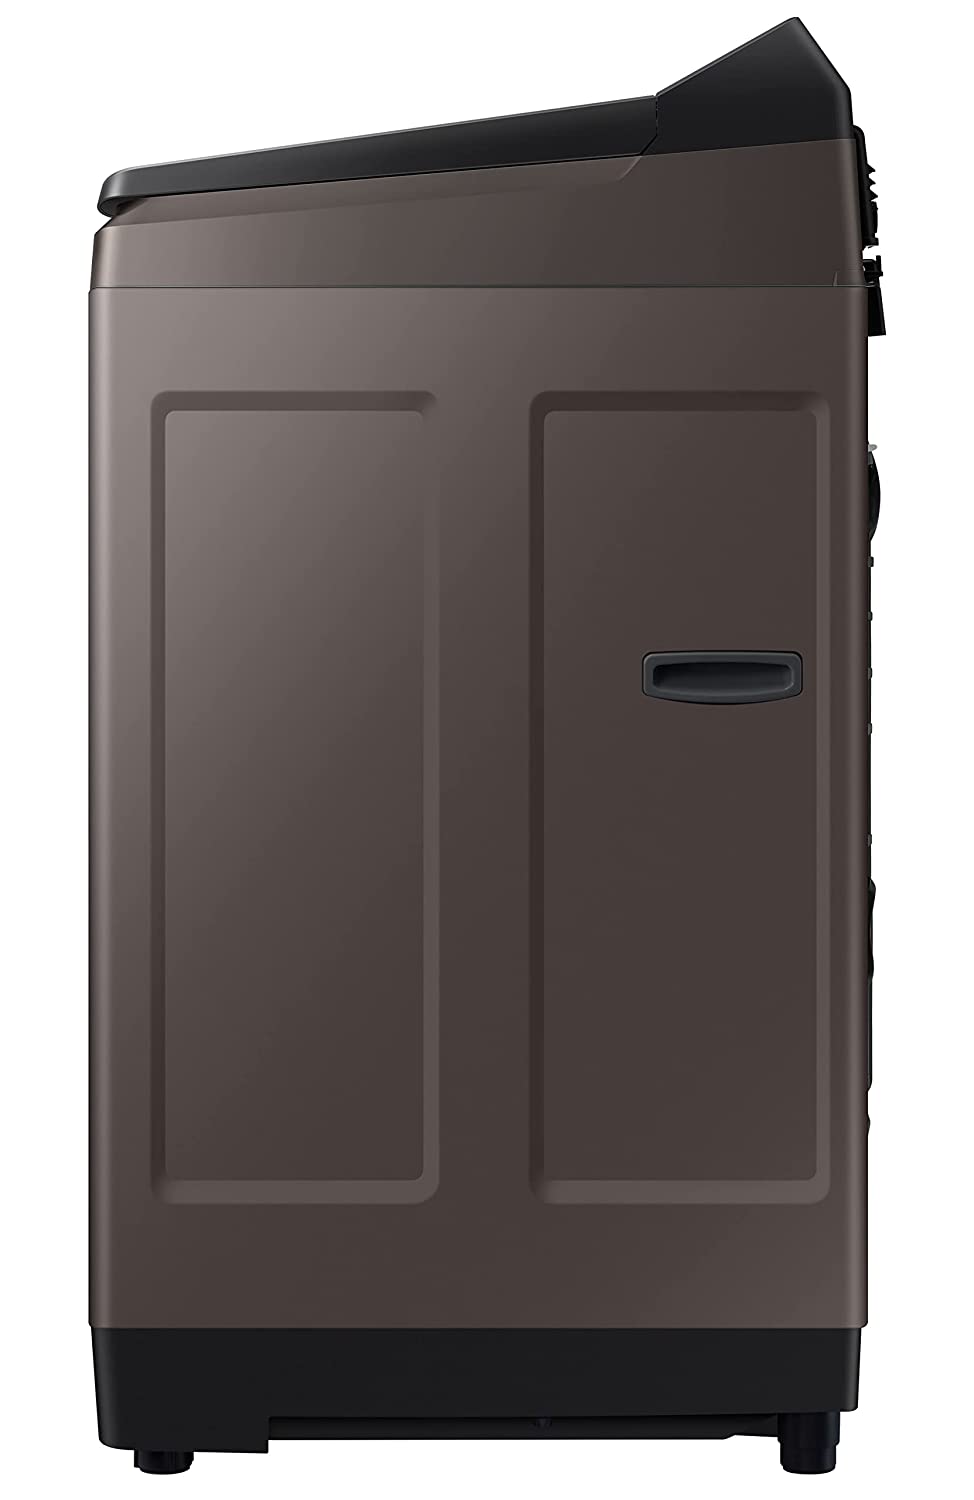 Samsung 9.0 5 star Fully Automatic Top Load Washing Machine WA90BG4686BRTL ,Rose Brown - Mahajan Electronics Online